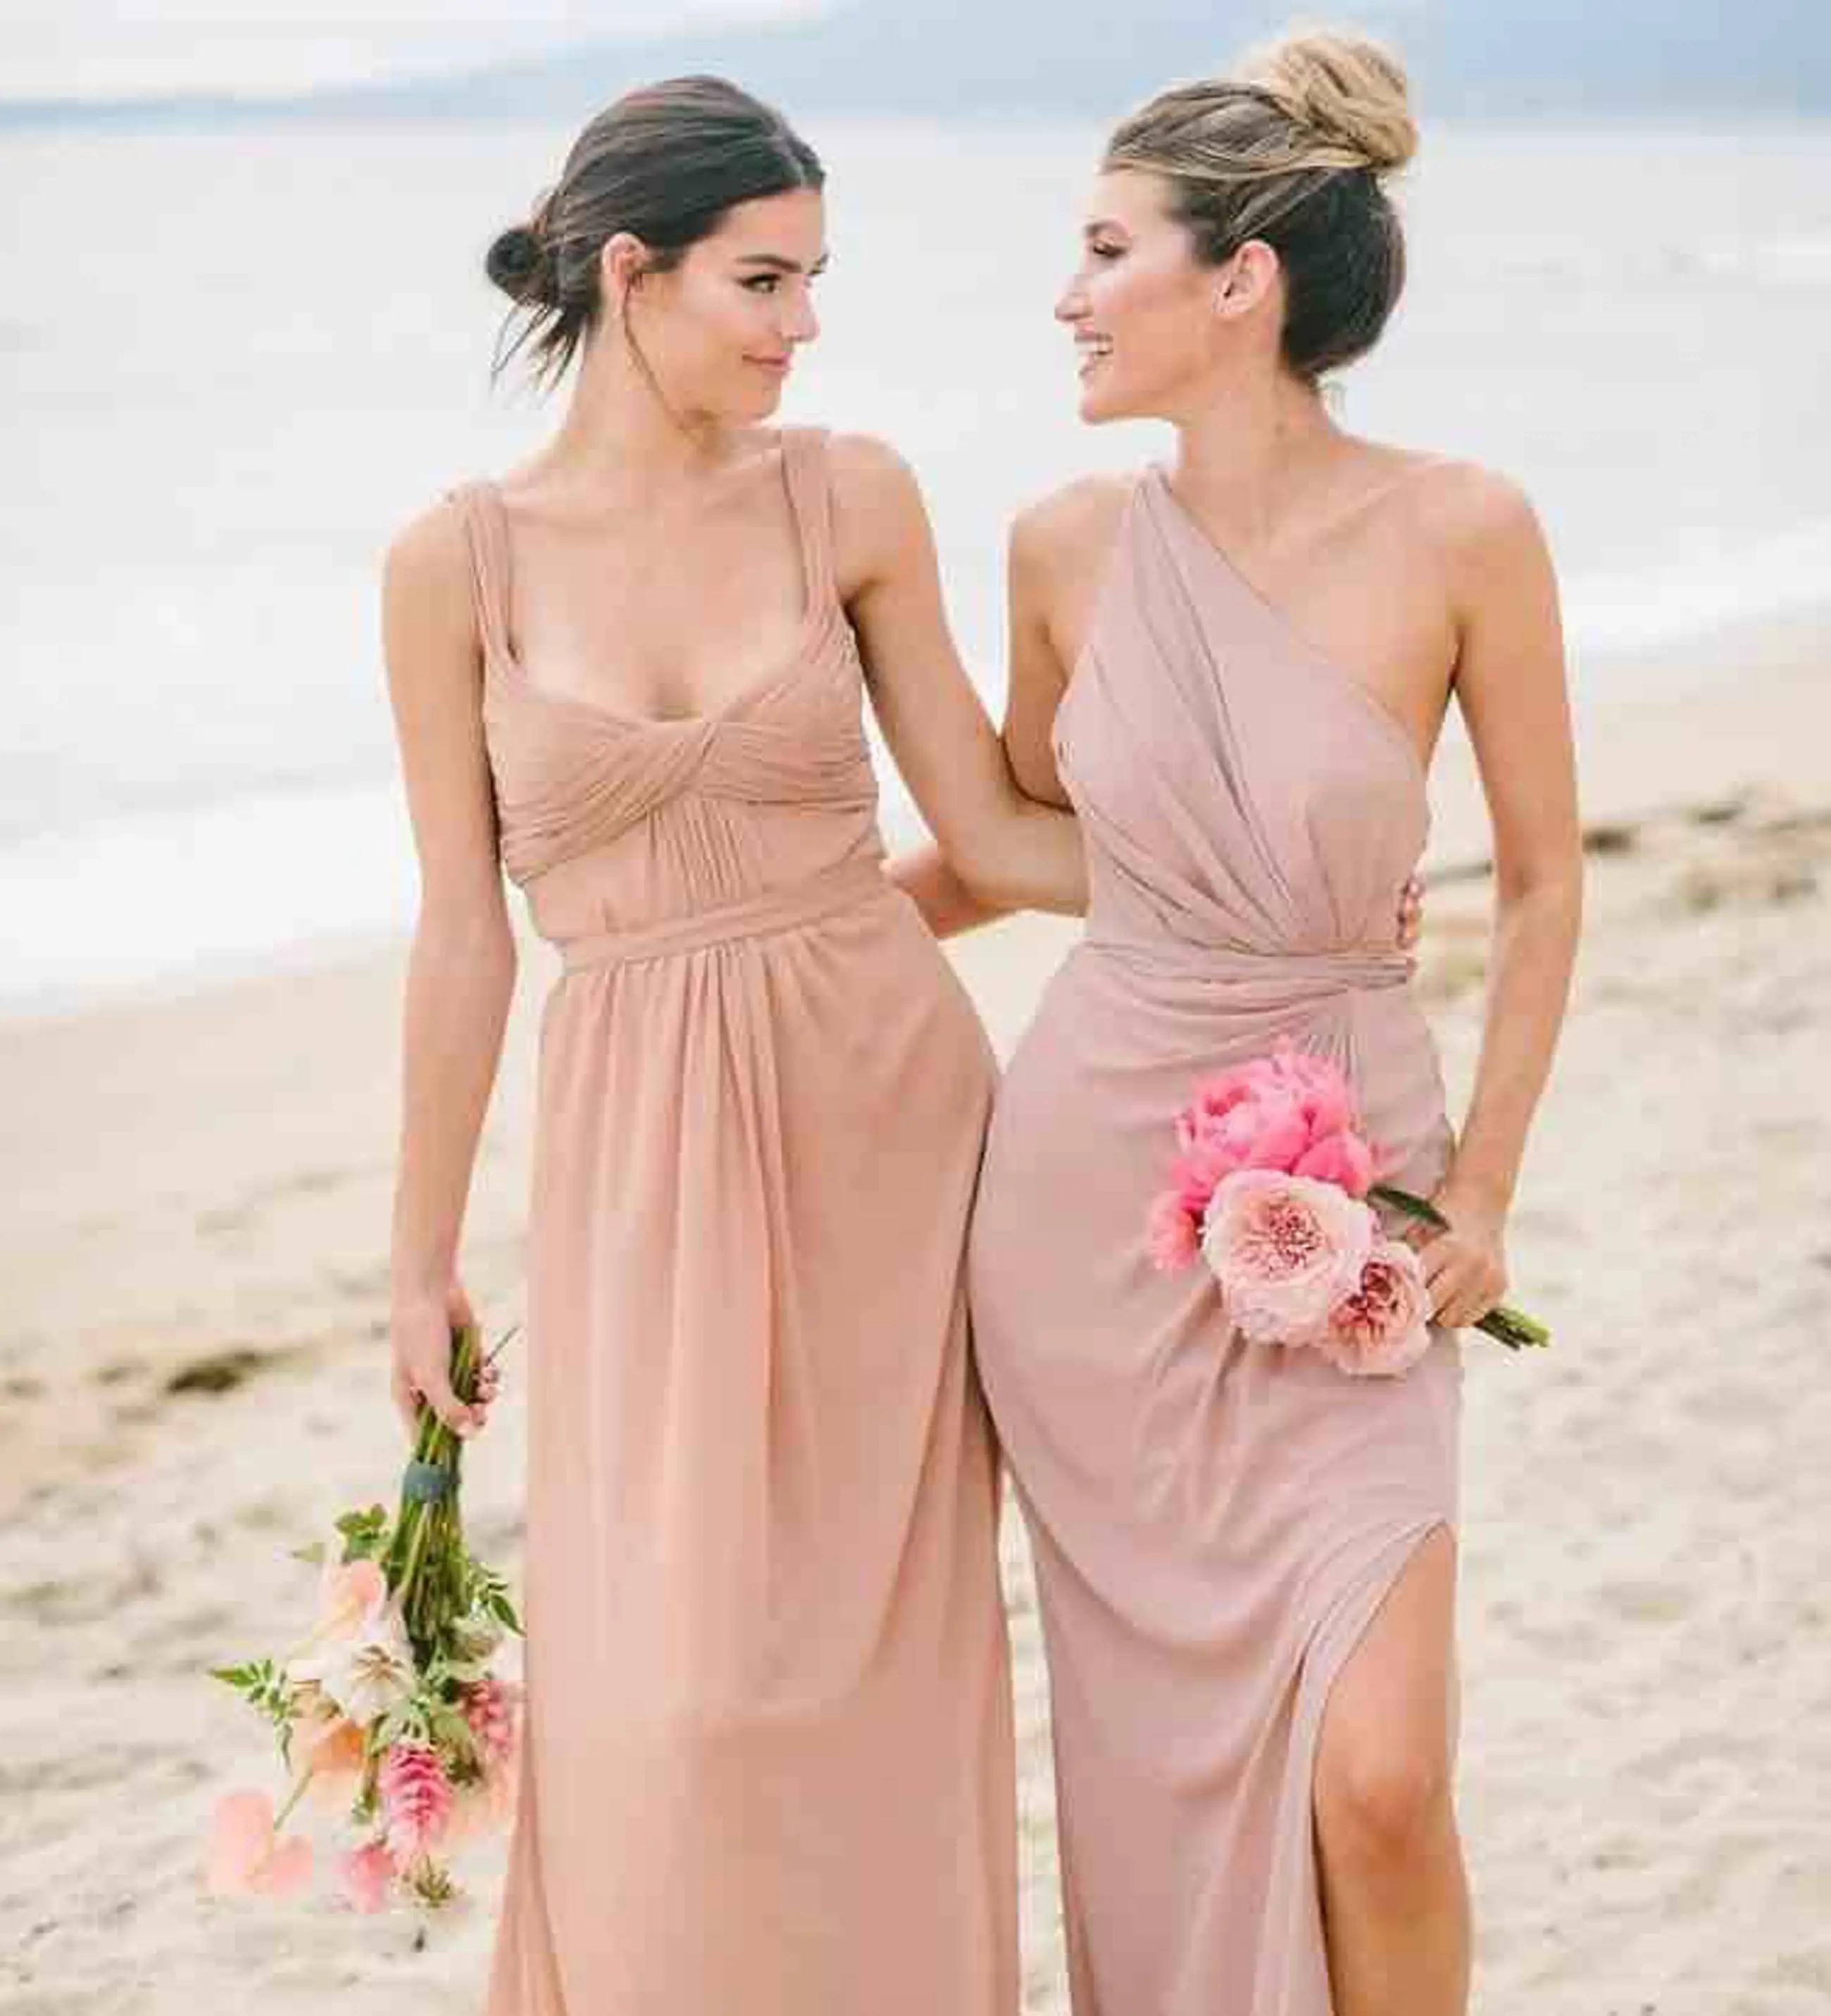 Models wearing a pink dresses. Mobile image